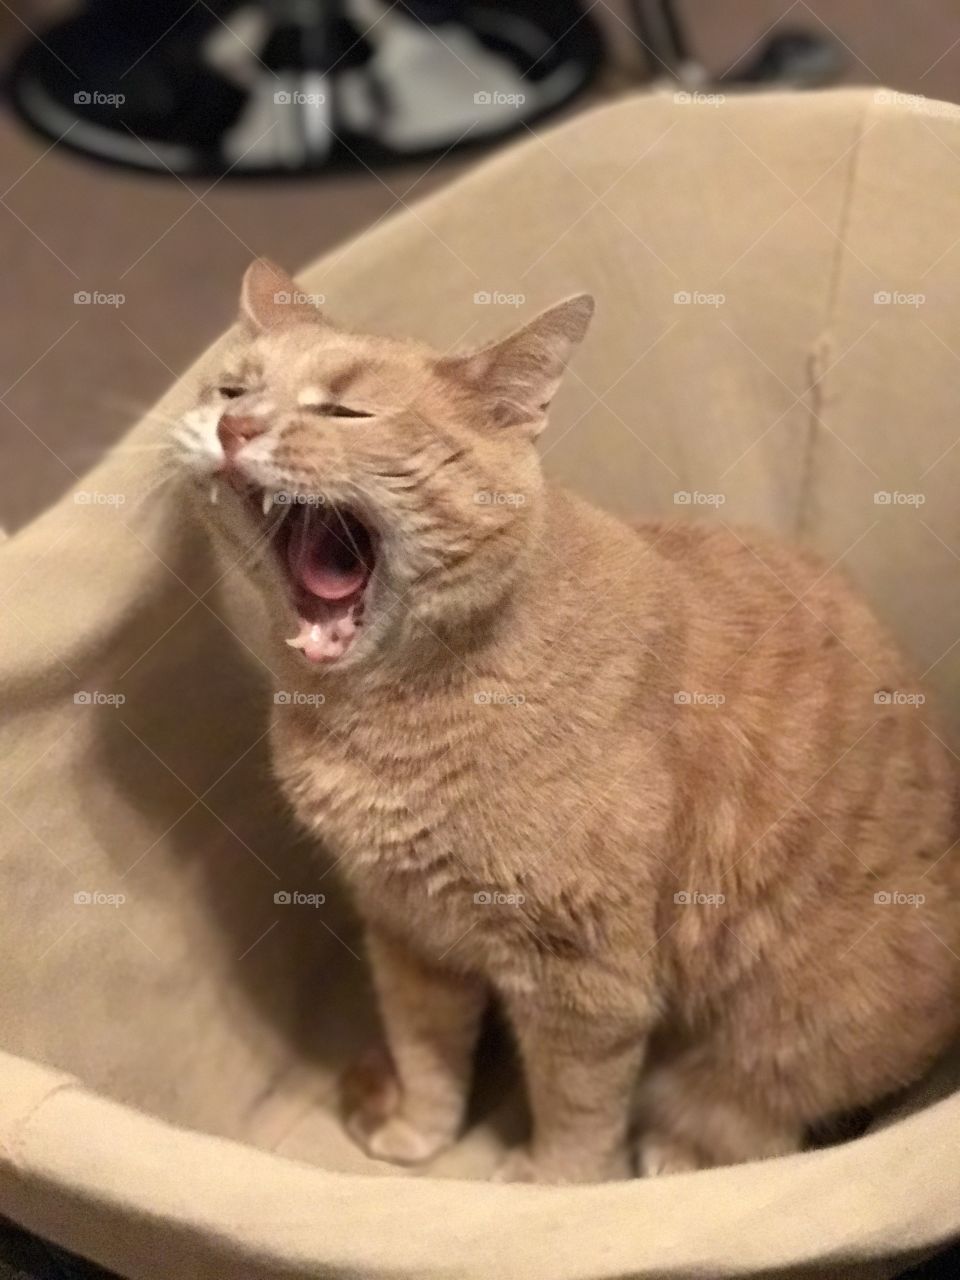 Caught him mid yawn